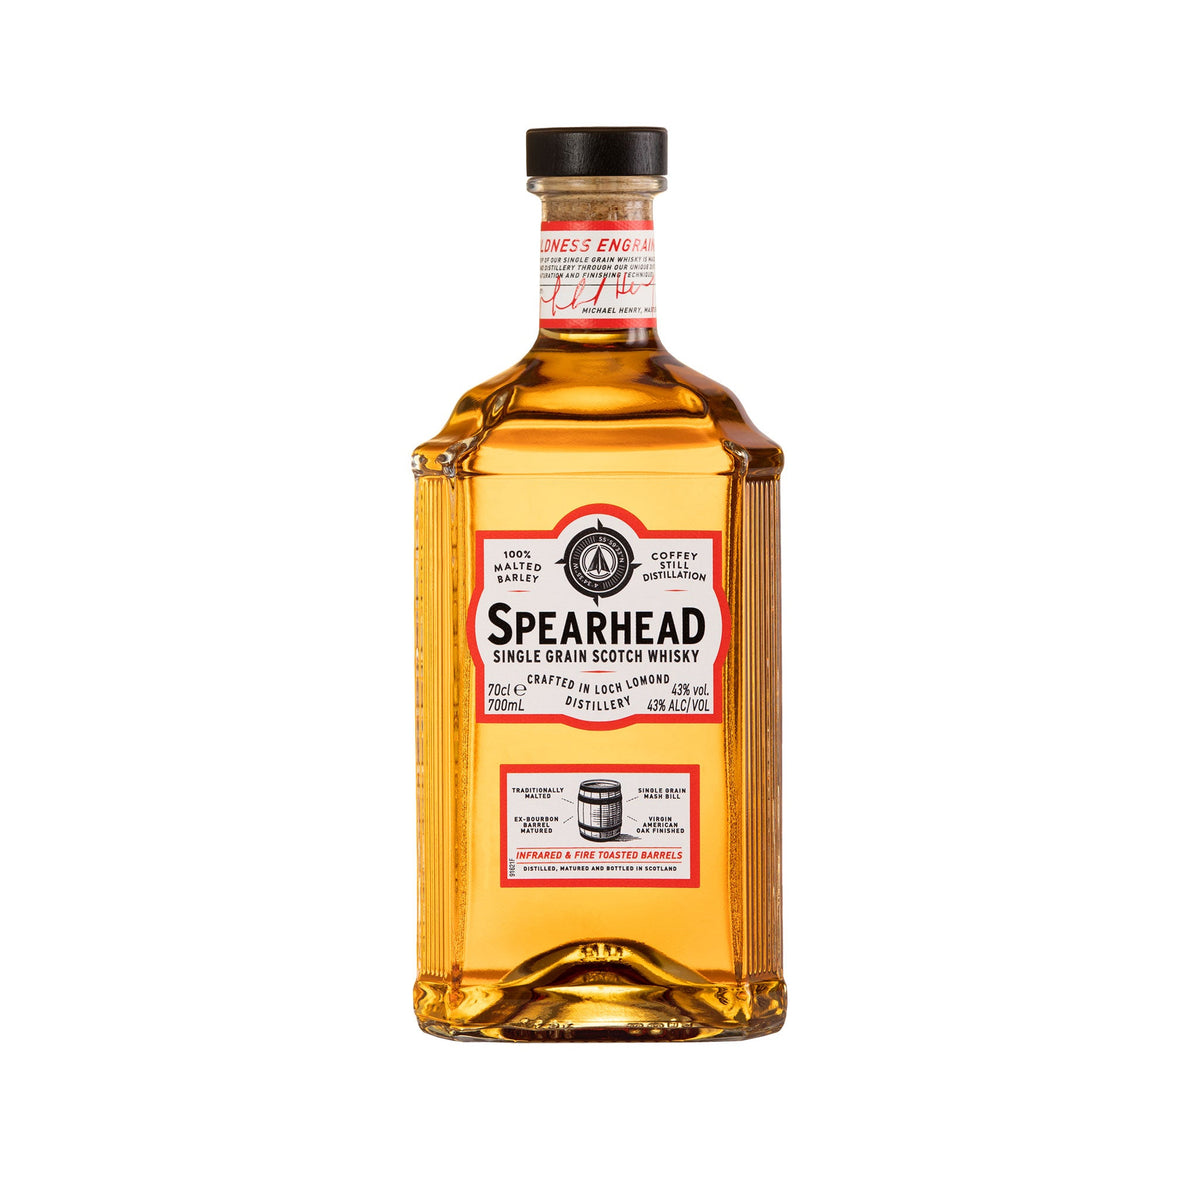 Spearhead Single Grain Scotch Whisky - Loch Lomond Group